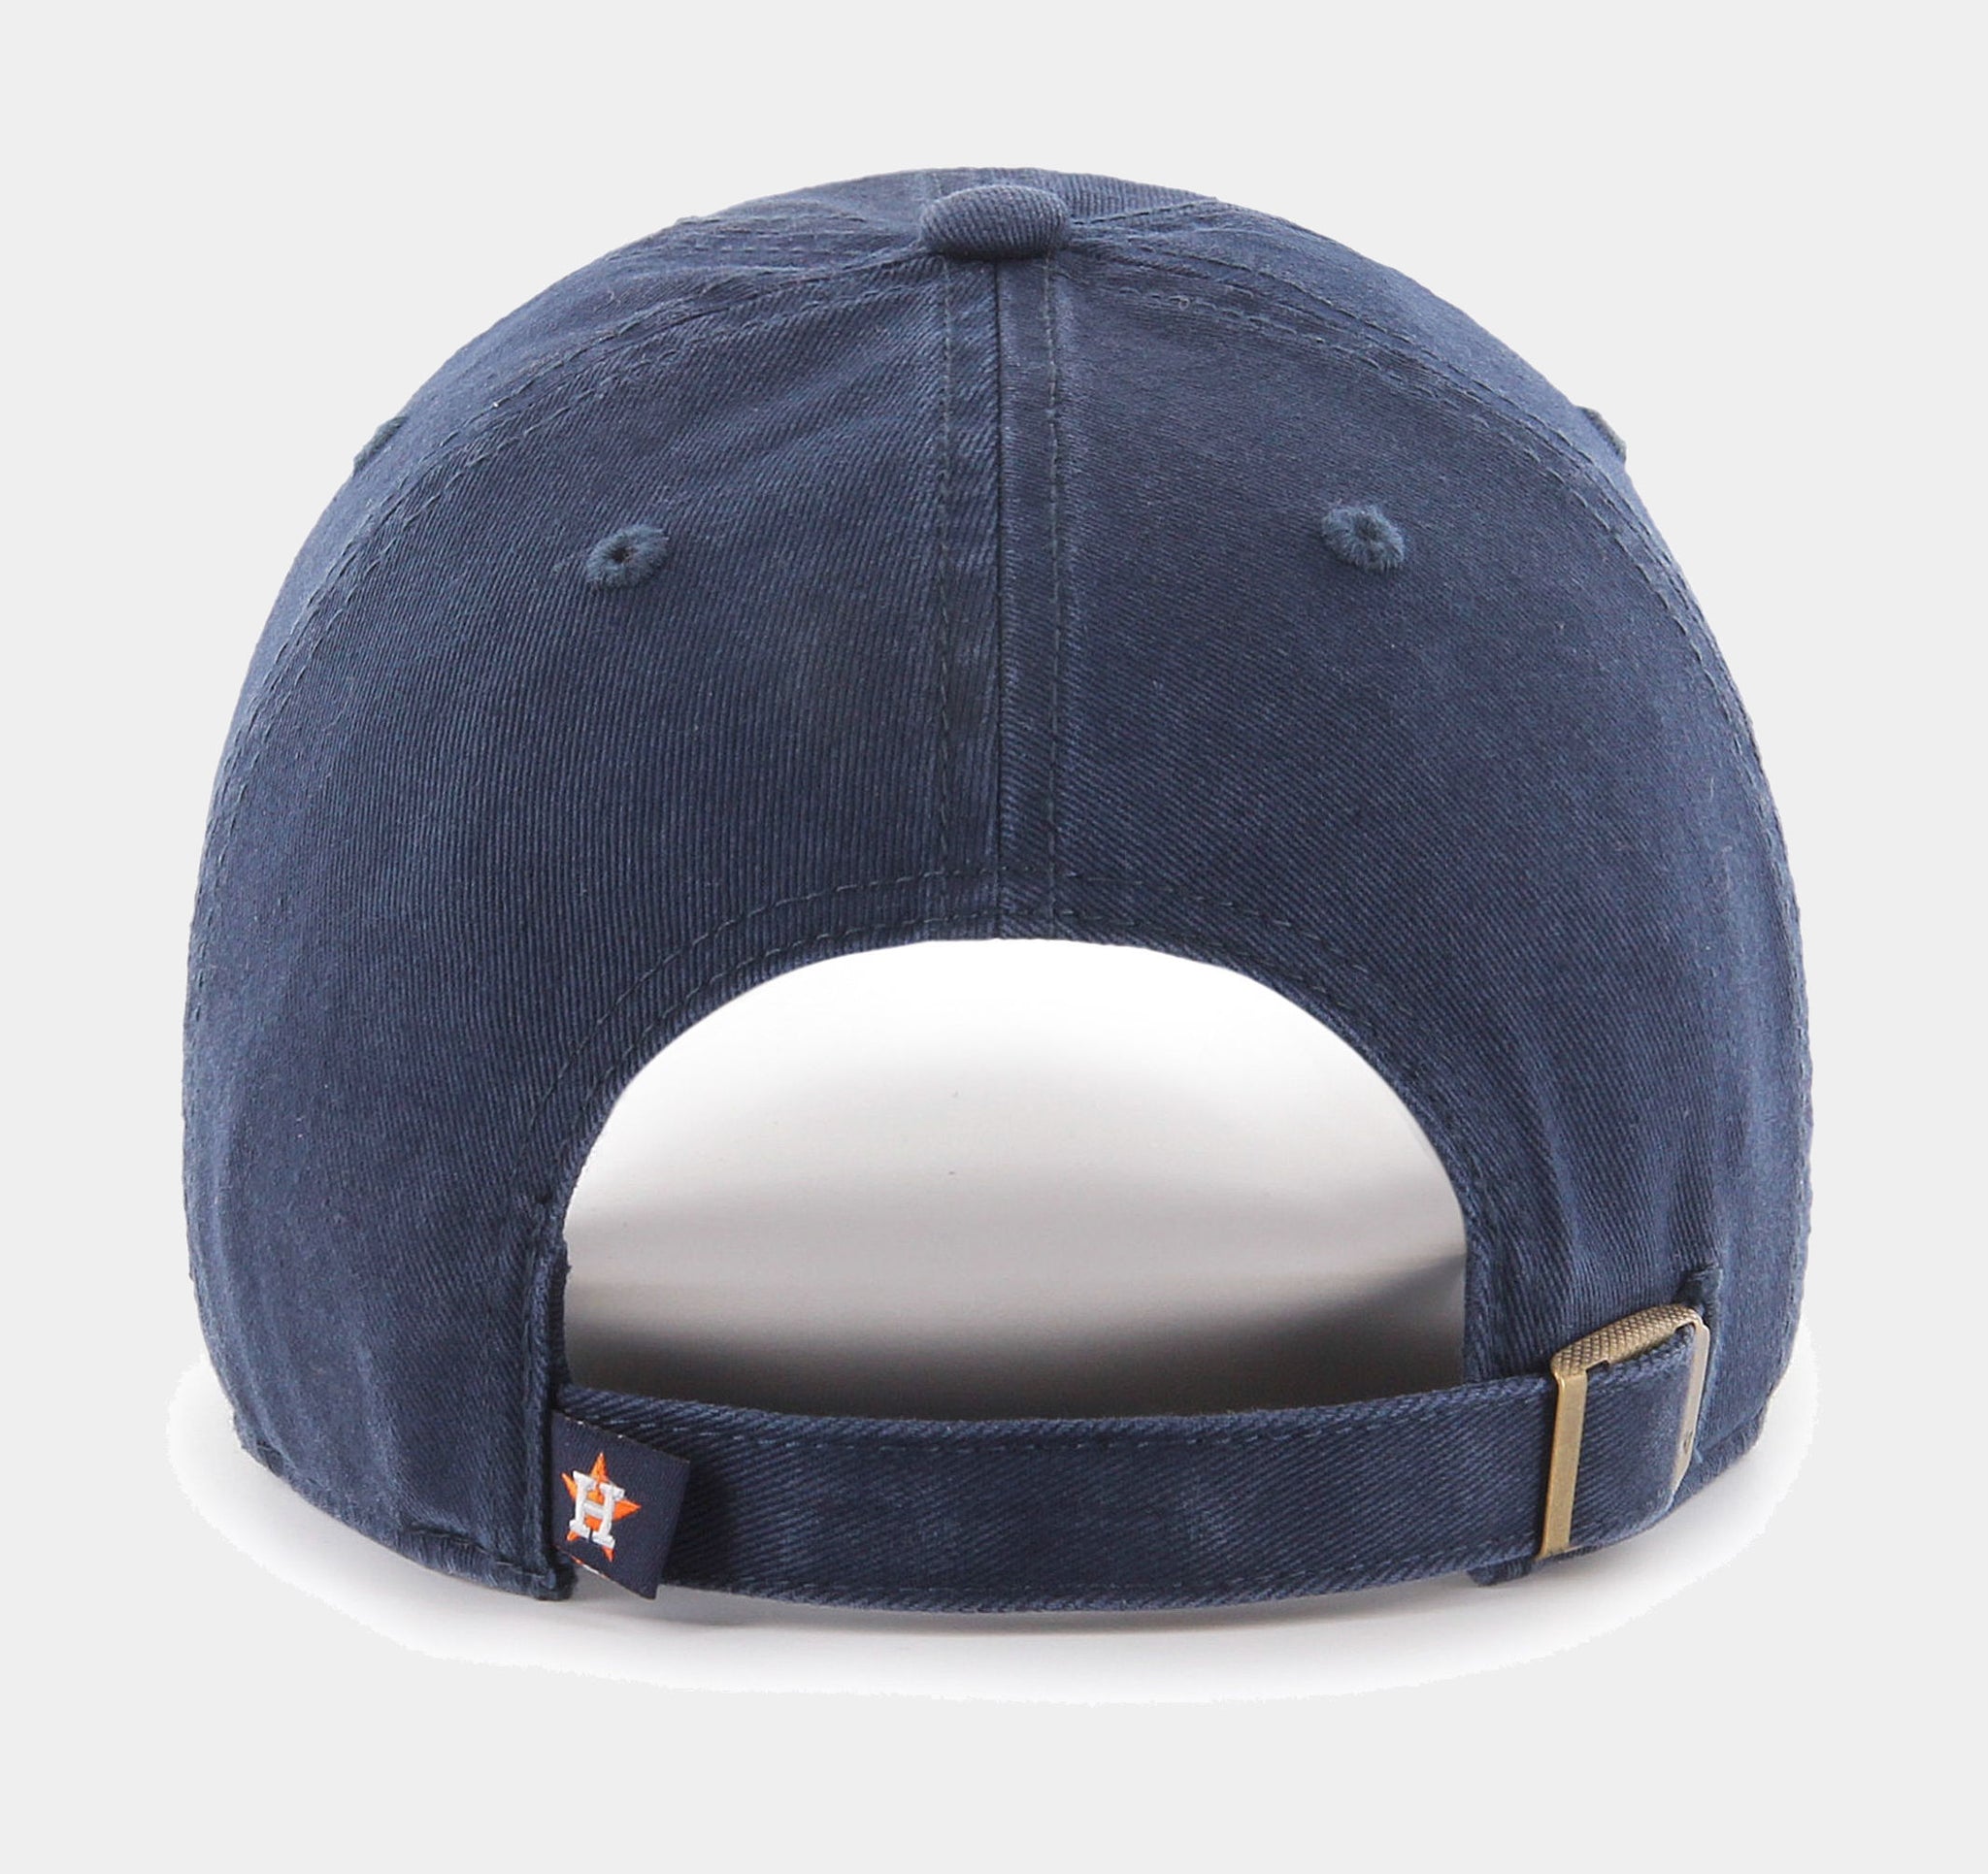 Houston Astros Men's 47 Brand Clean Up Adjustable Hat